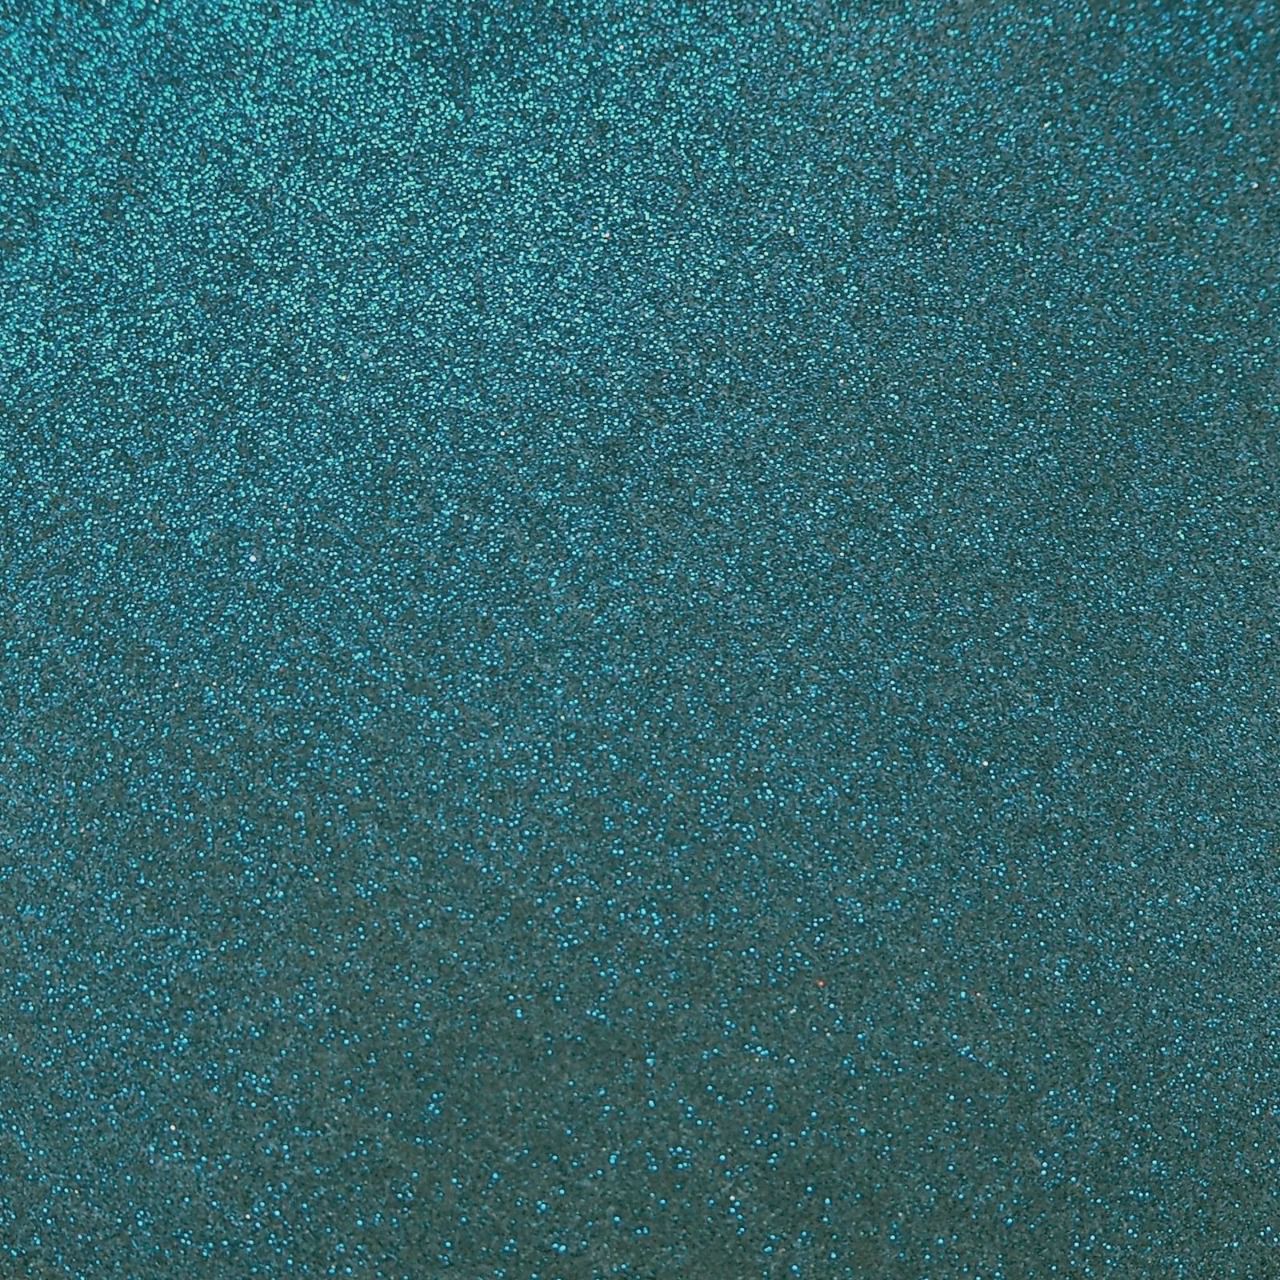 Paillettes ultra fines - Cosmic shimmer polished blue teal